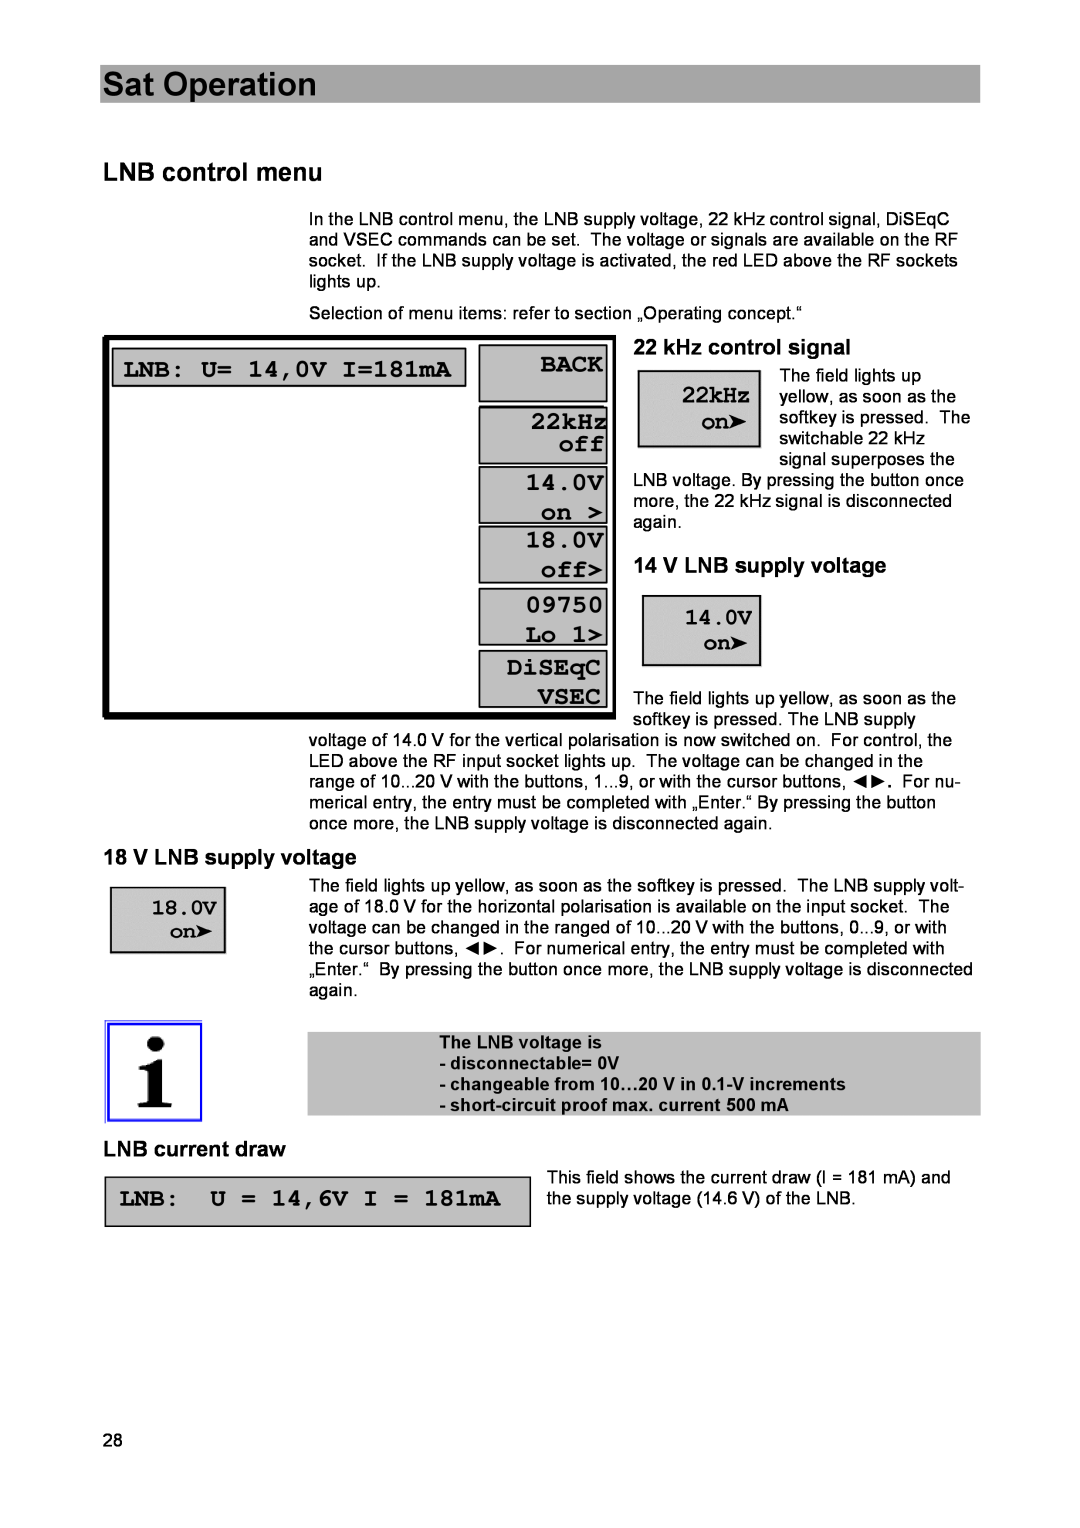 DreamGEAR MSK 33 LNB control menu, 22kHz, 14.0V, 18.0V, LNB U = 14,6V I = 181mA, kHz control signal, V LNB supply voltage 